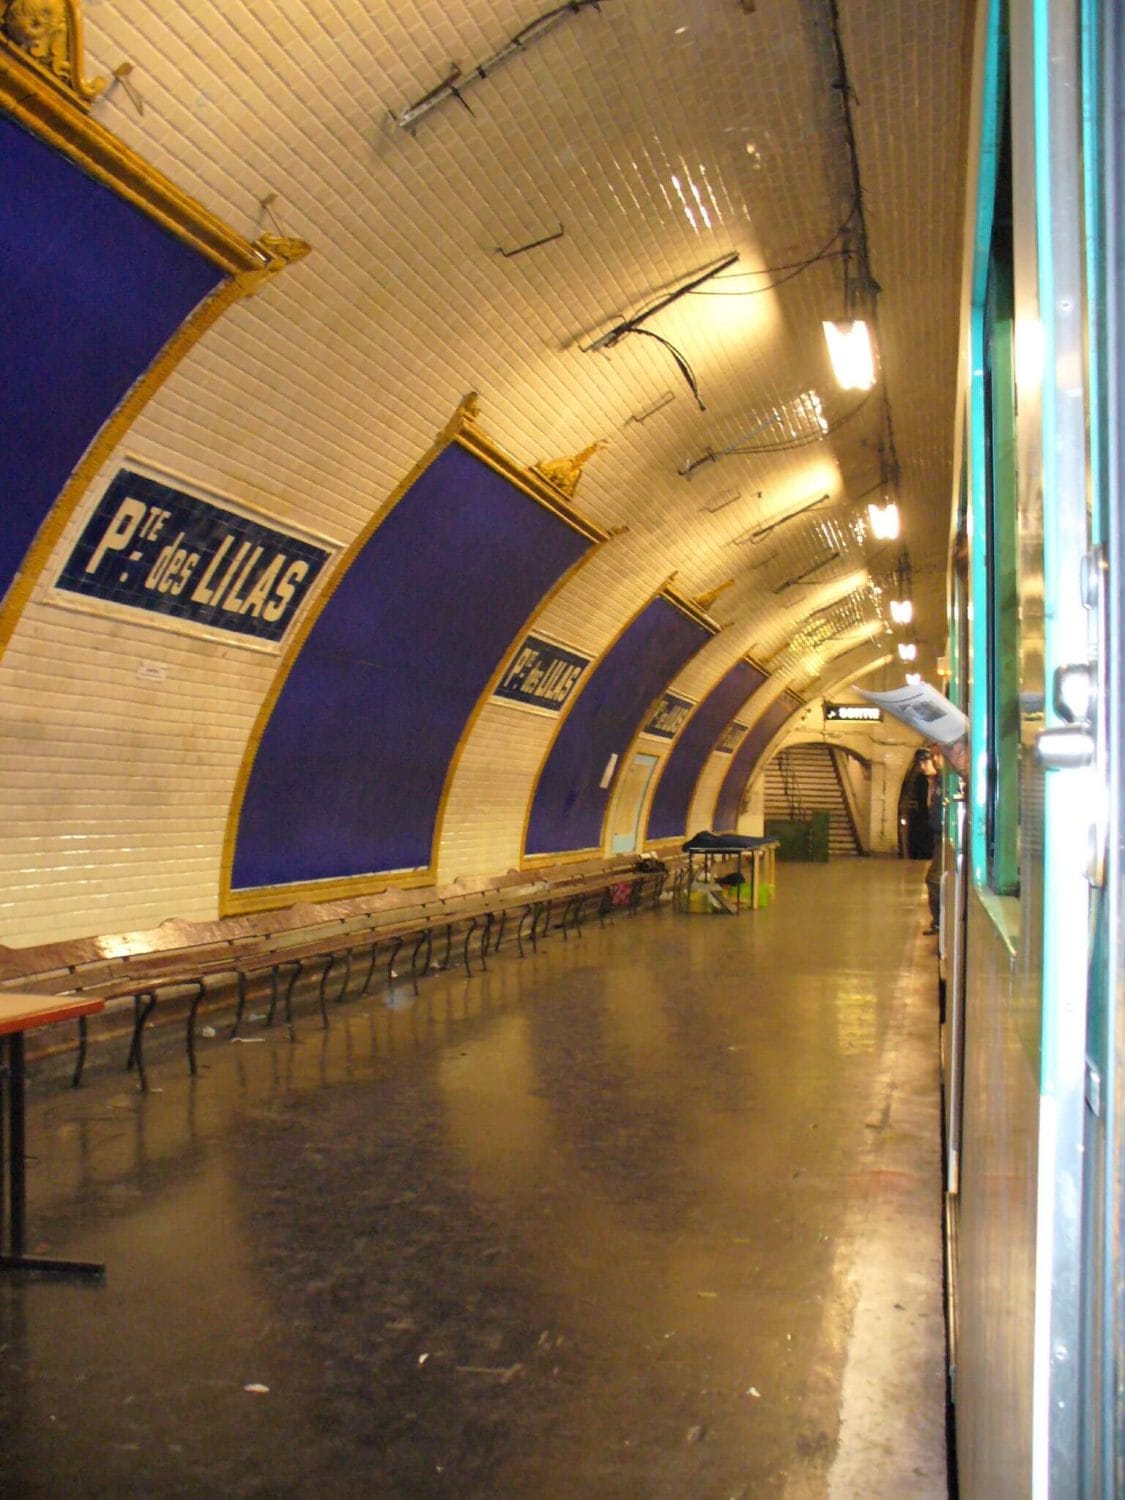 Station Porte des Lilas cinéma - Photo Wikimedia Commons by Yann Caradec